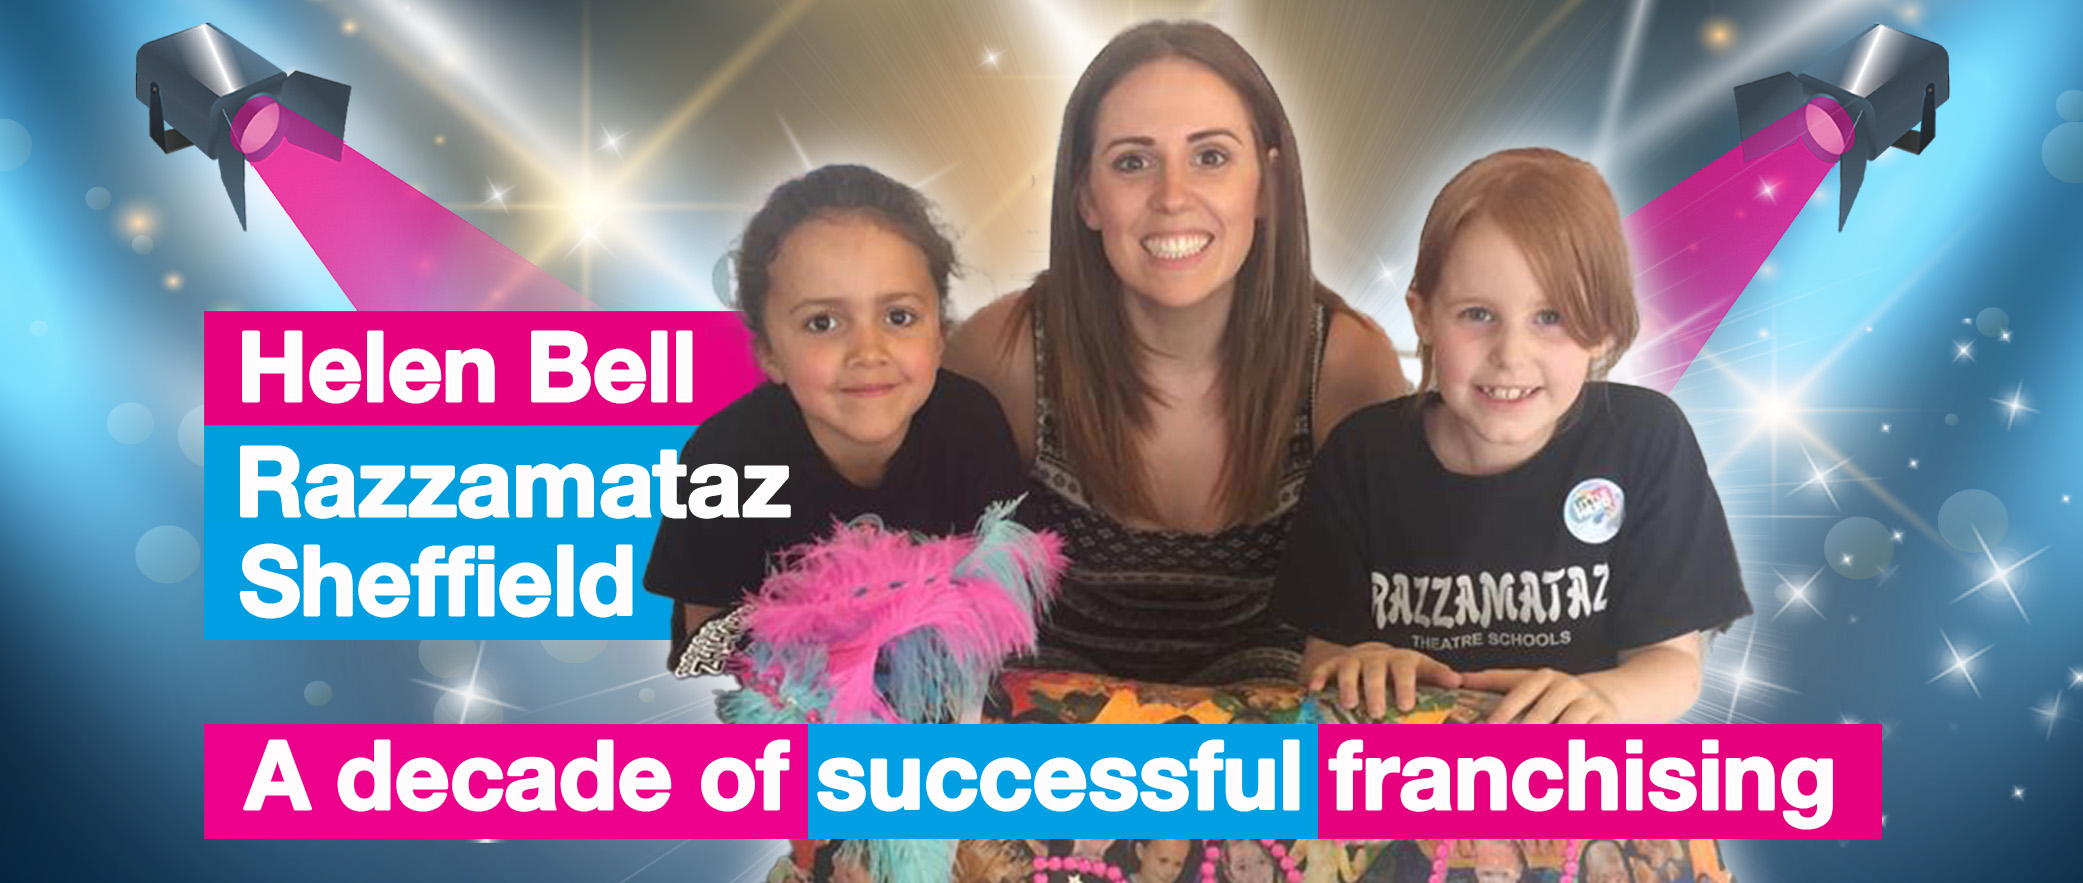 Helen Bell Razzamataz Sheffield - A decade of successful franchising